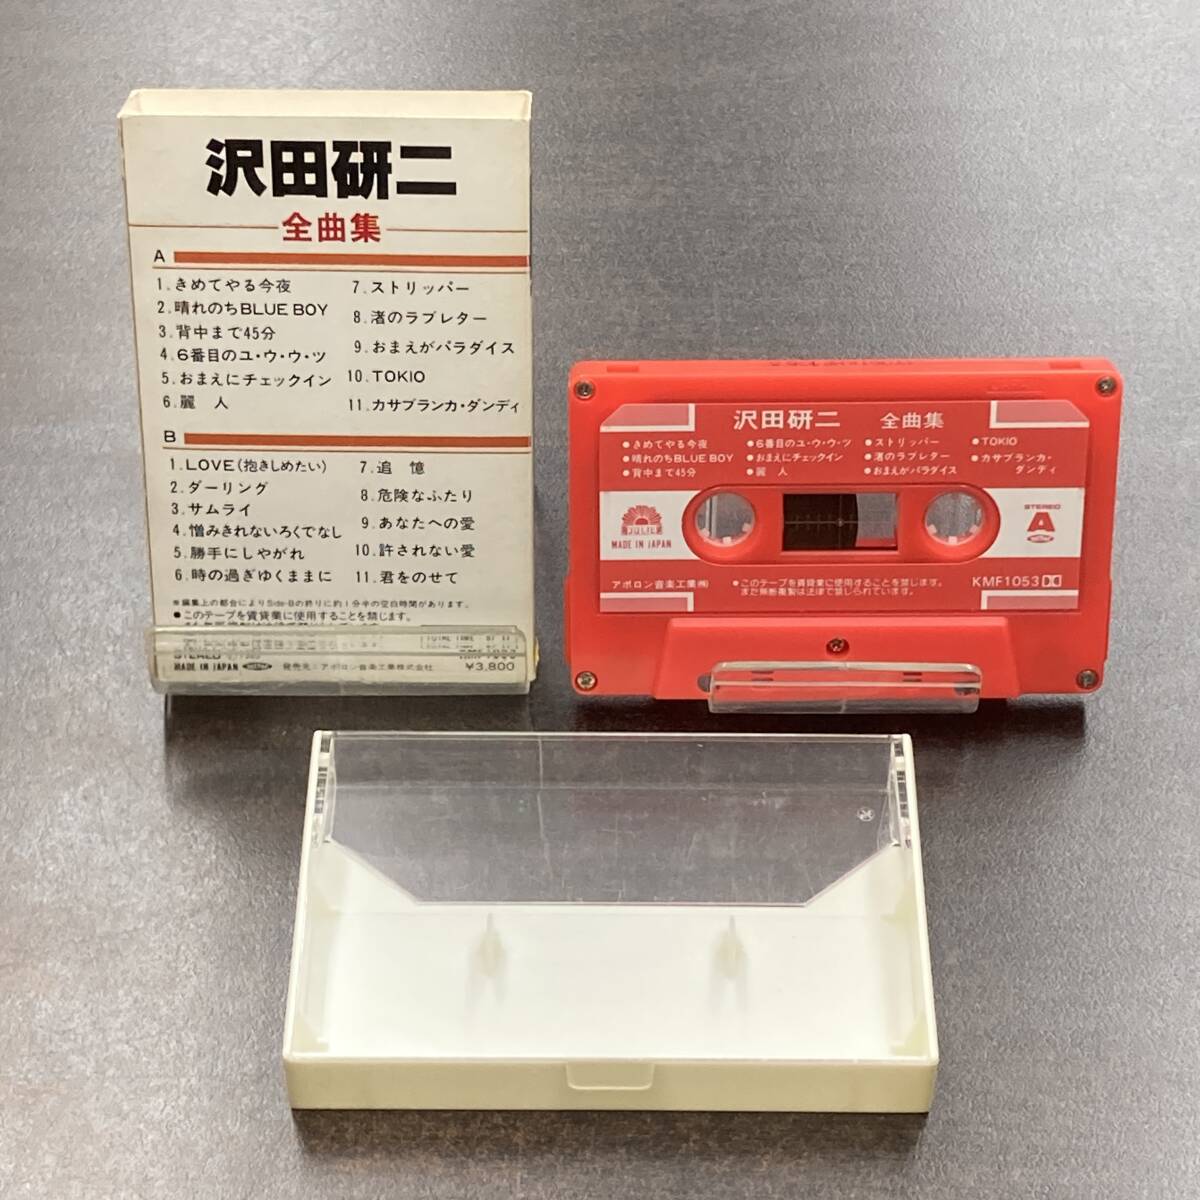 1088M 沢田研二 全曲集 カセットテープ / Kenji Sawada Idol Cassette Tapeの画像2